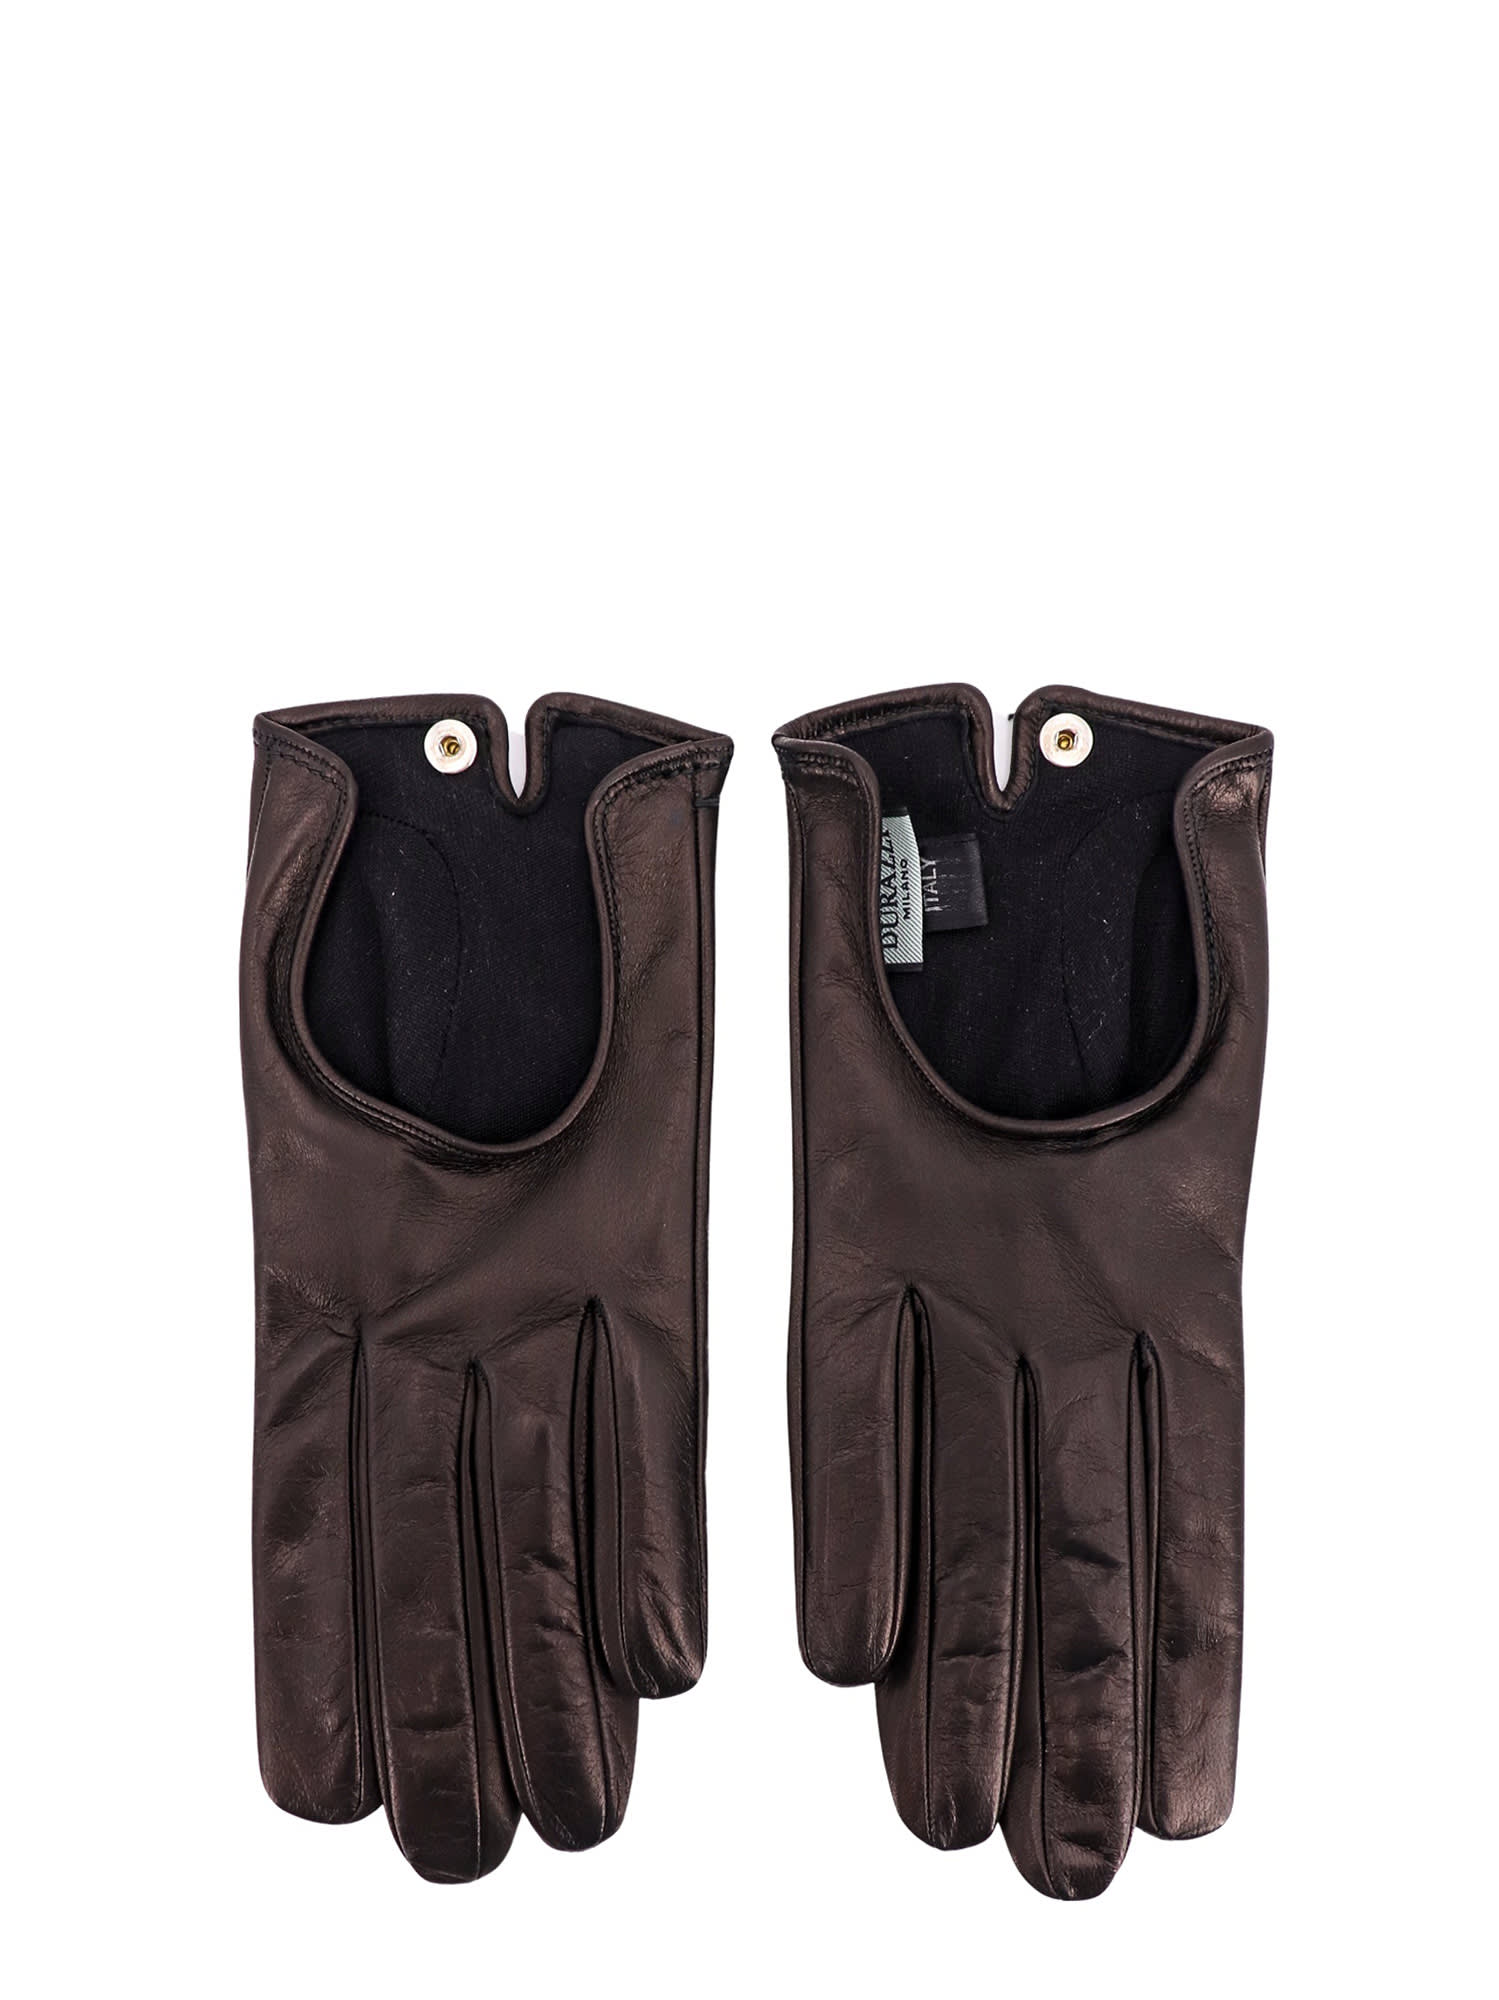 Durazzi Milano Gloves